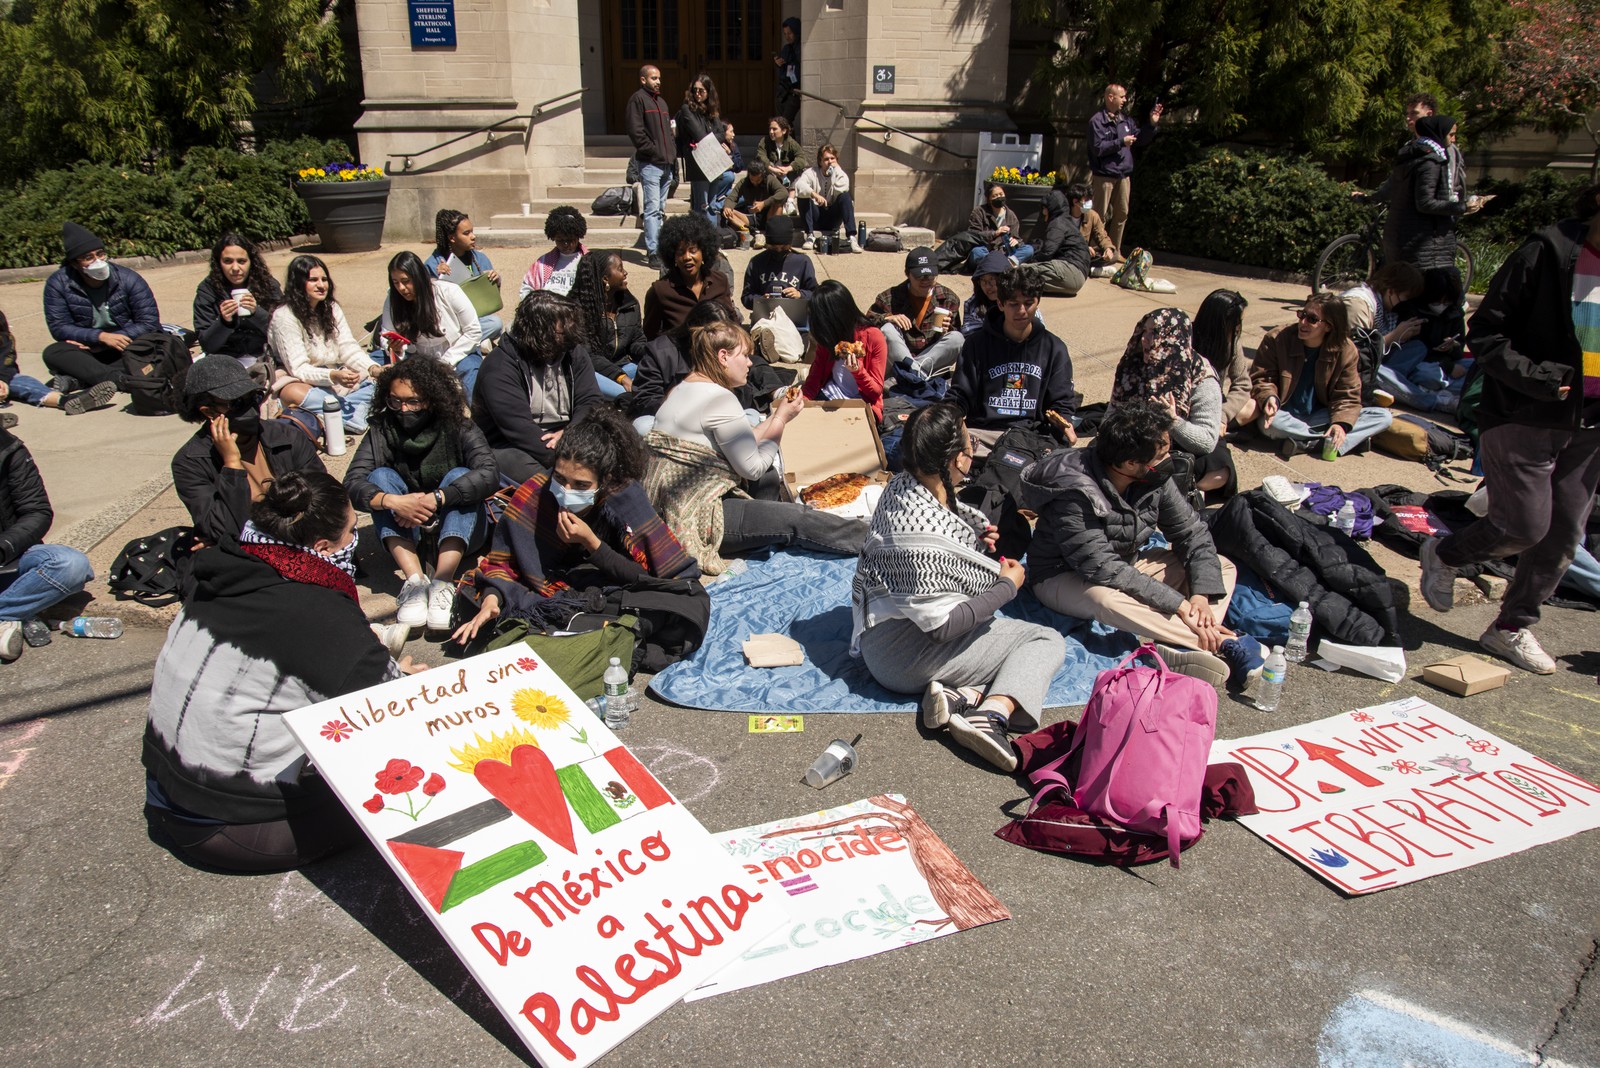 Manifestantes pró-palestina na Universidade Yale, em Connecticut  — Foto: Adrian Martinez Chavez/The New York Times